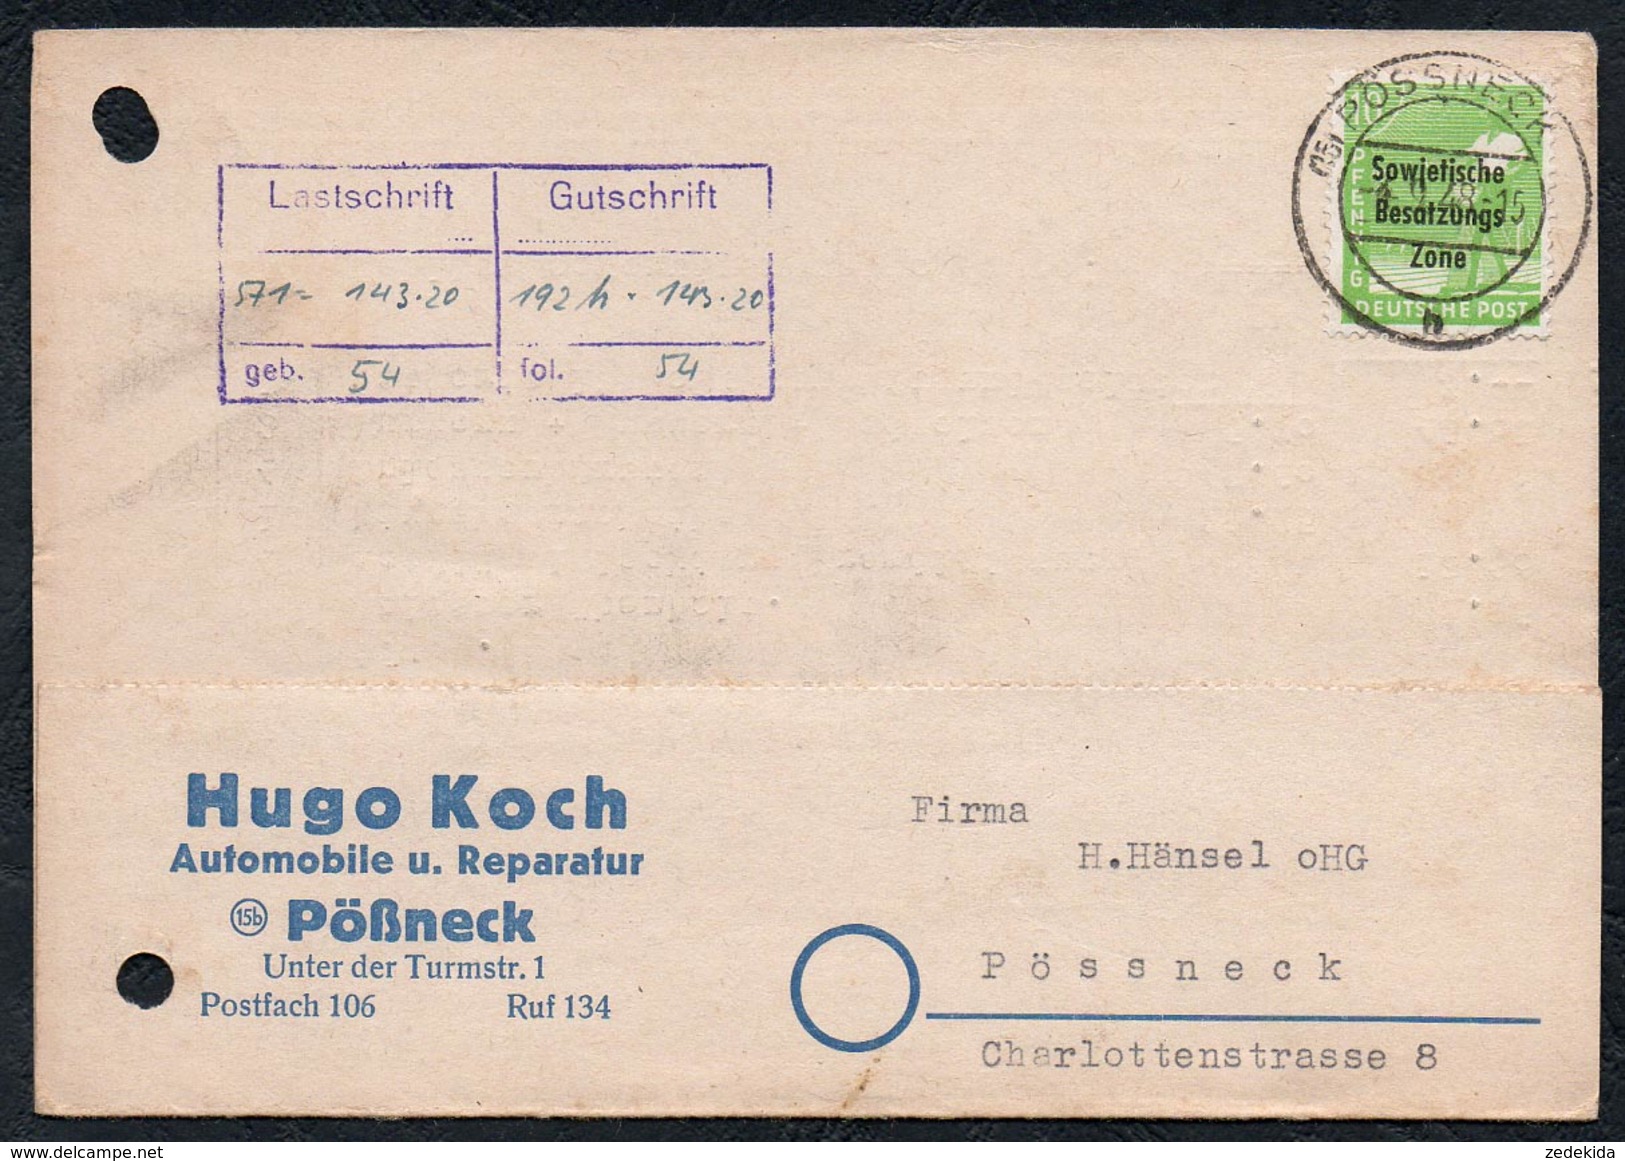 A6238 - Alte Postkarte - Bedarfspost - Pössneck - Pößneck - Hugo Koch Automobile SBZ 1948 Rechnung - Pössneck